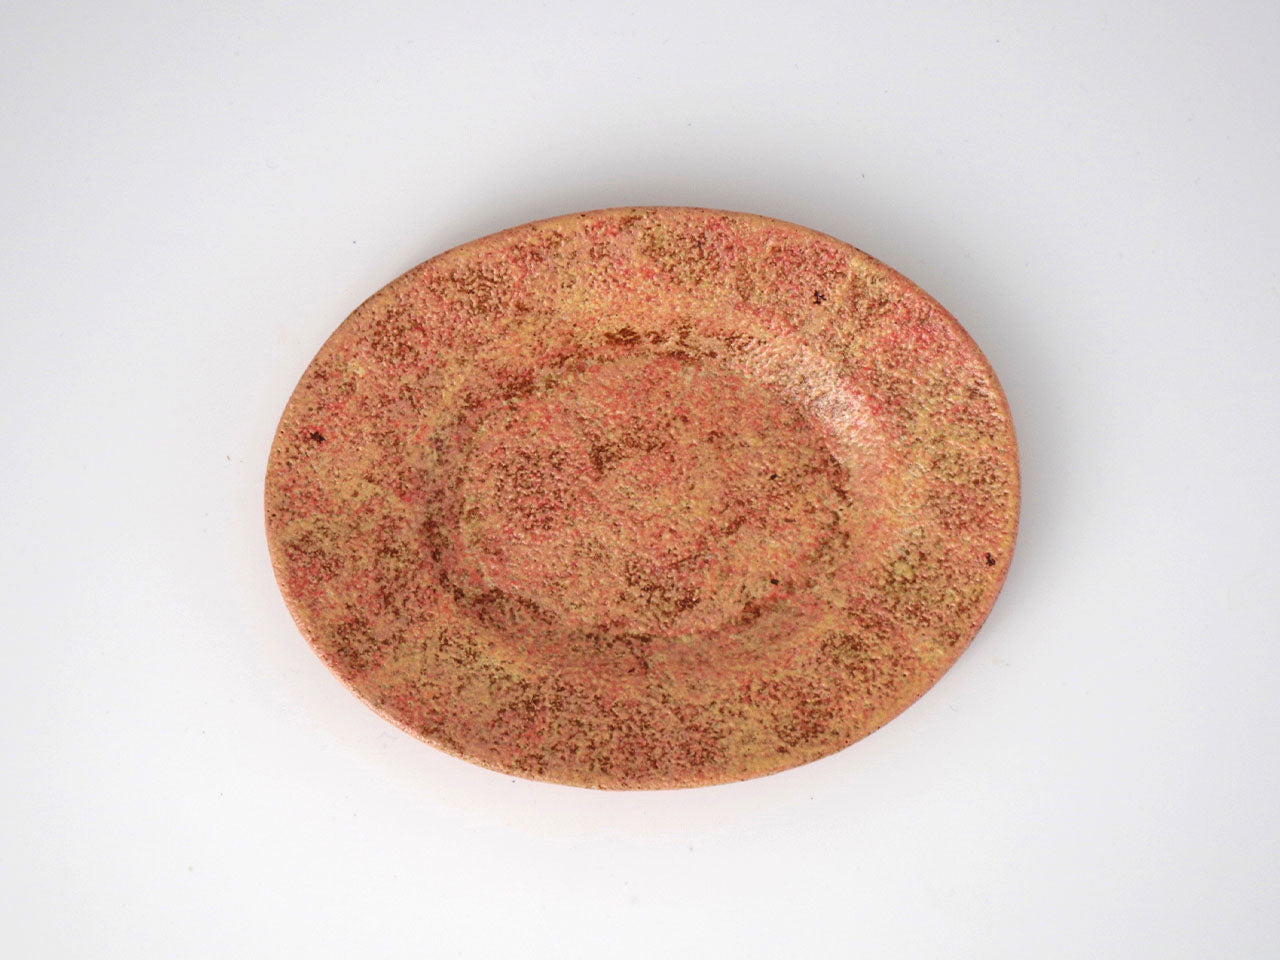 Table ware, Oval plate, Multicolored overglaze, Three-color, Red, Blue, 2pcs set - Ken Shoji, Kasama ware,Ceramics